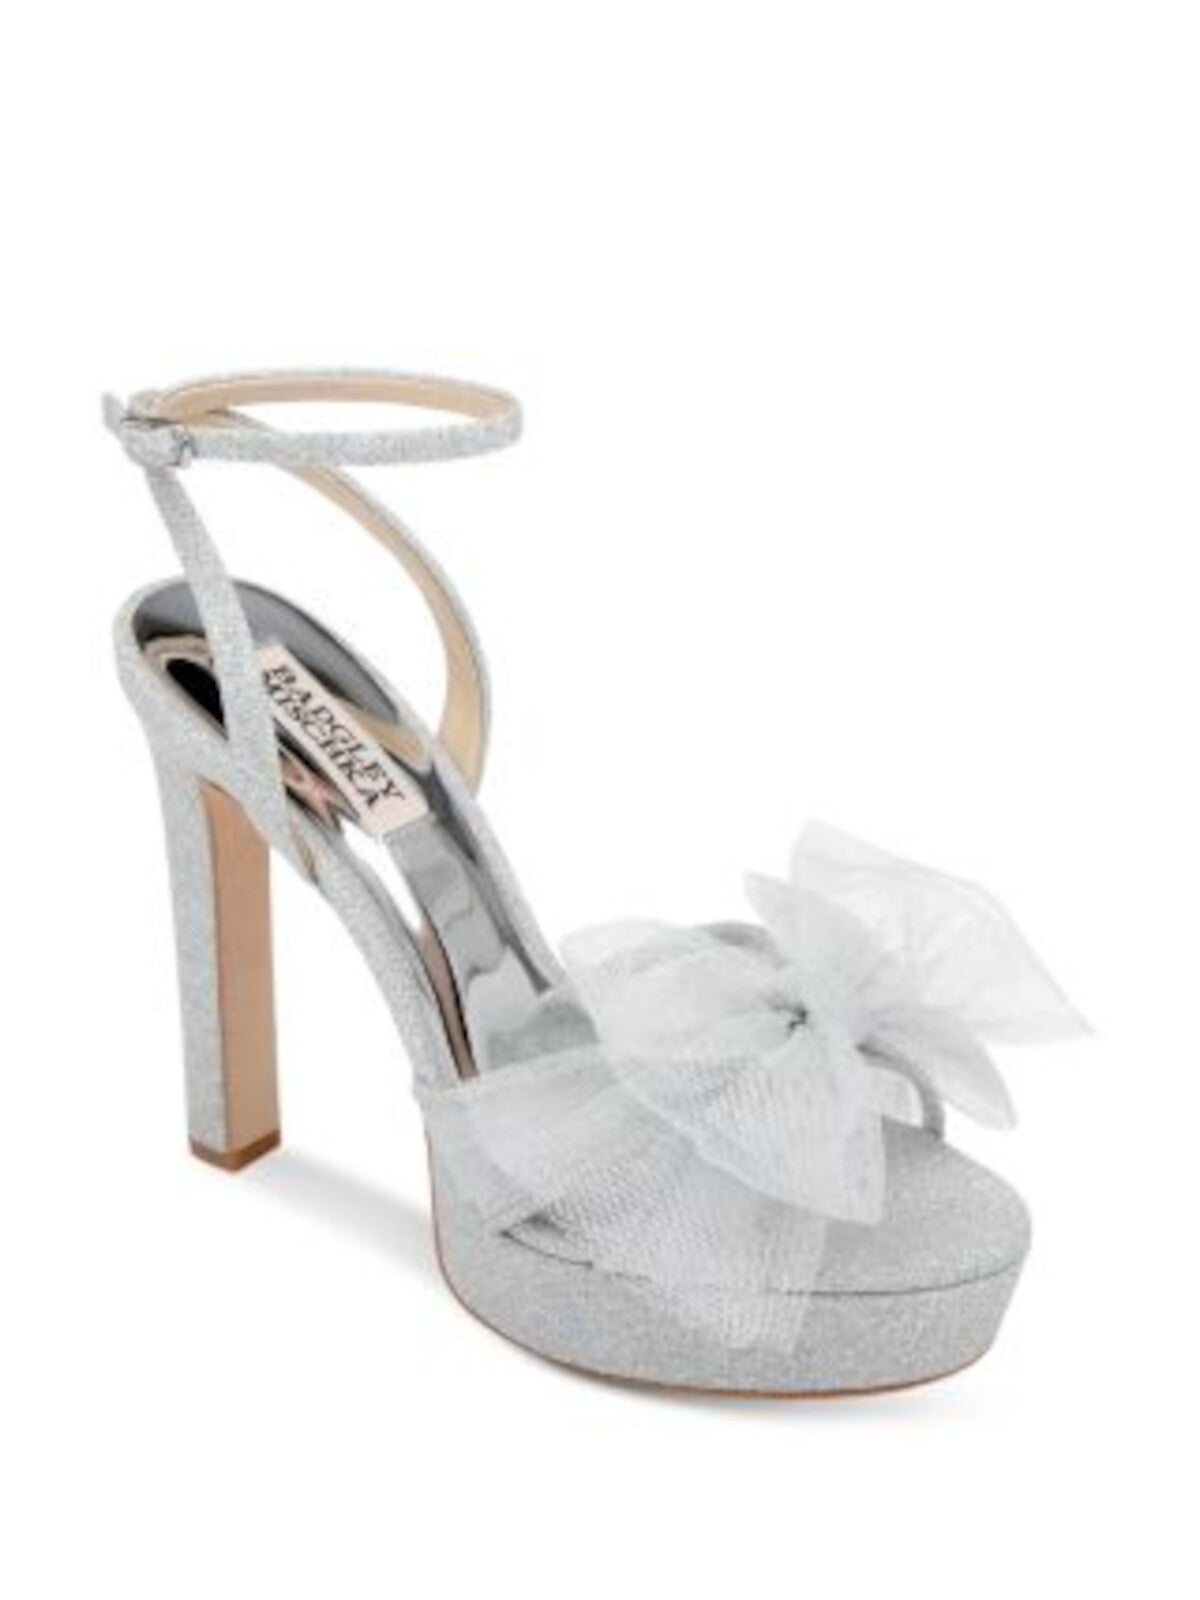 BADGLEY MISCHKA Womens Silver 1" Platform Bow Accent Adjustable Sophie Open Toe Buckle Dress Heeled Sandal 9 M